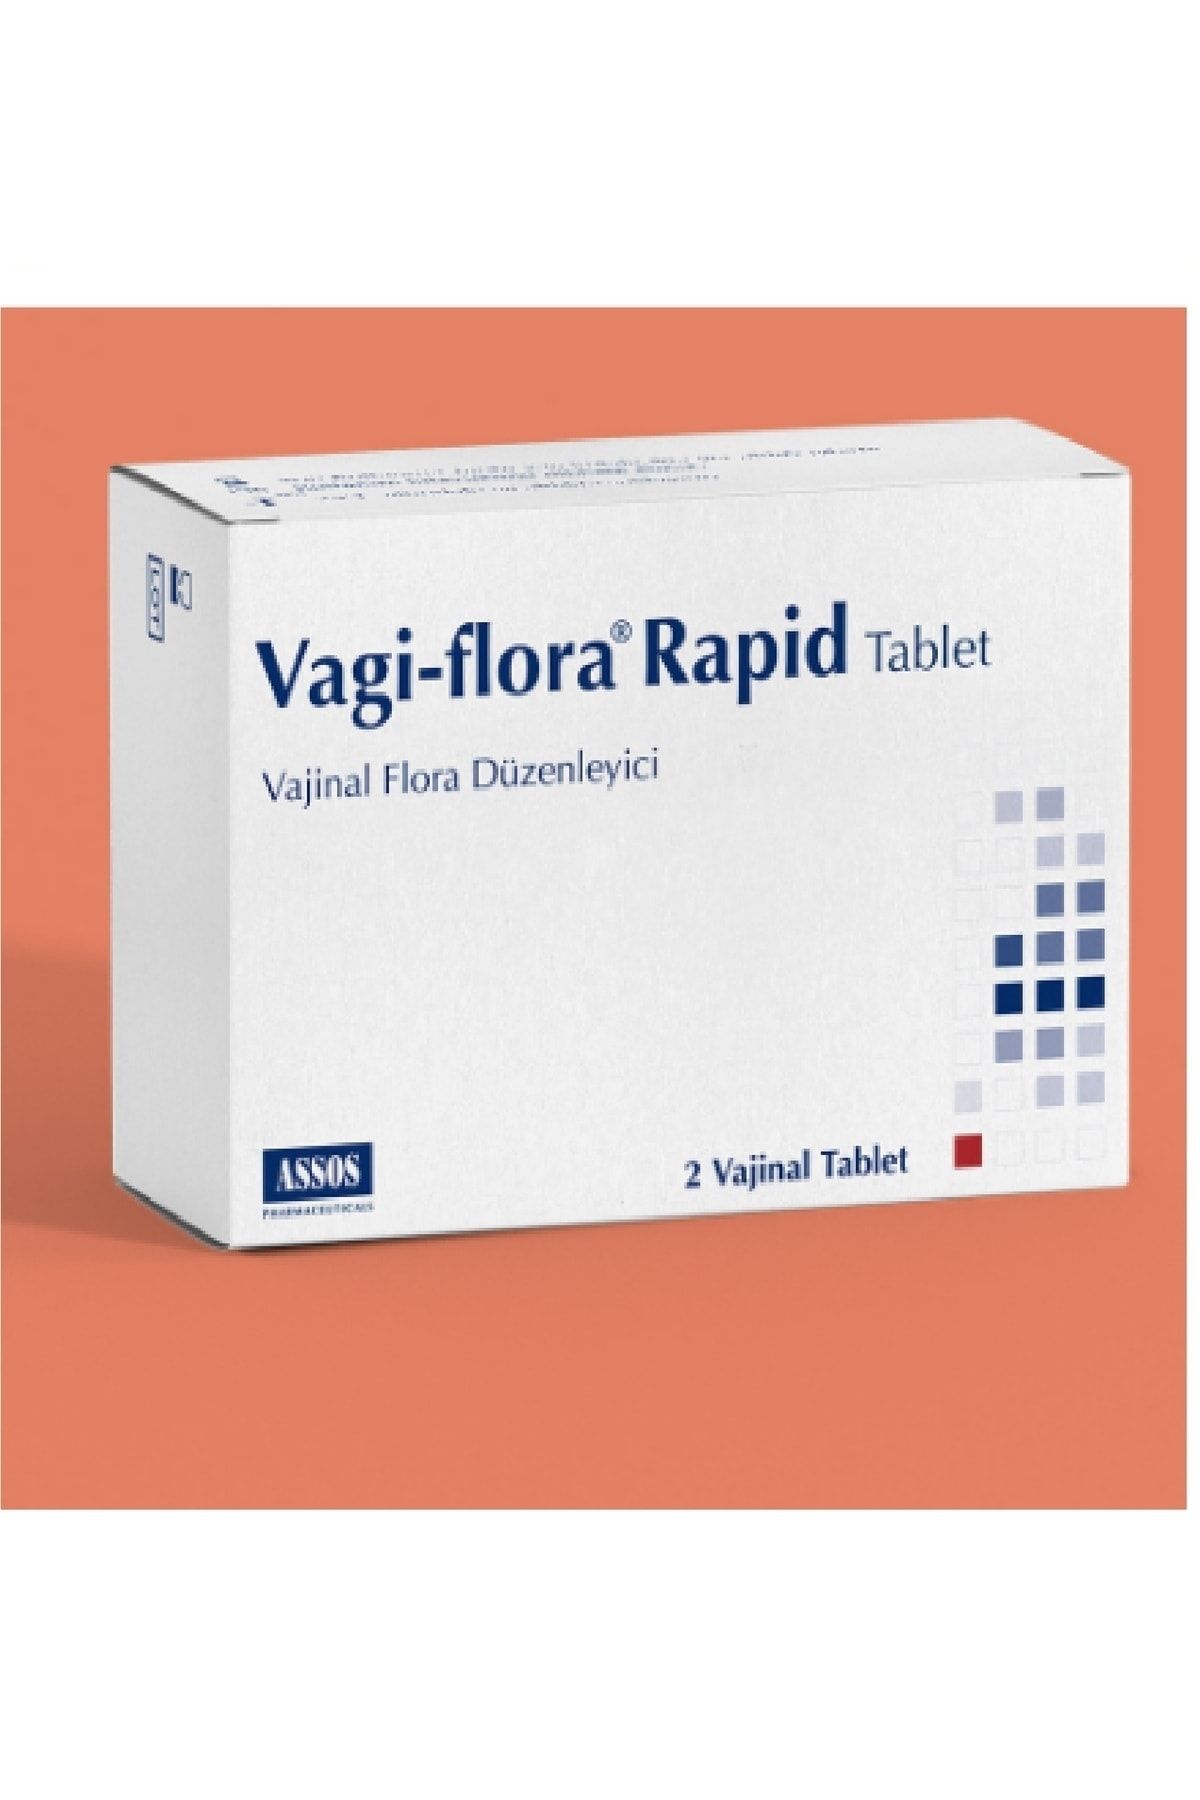 Assos Vagi-flora® Rapid Vajinal Tablet